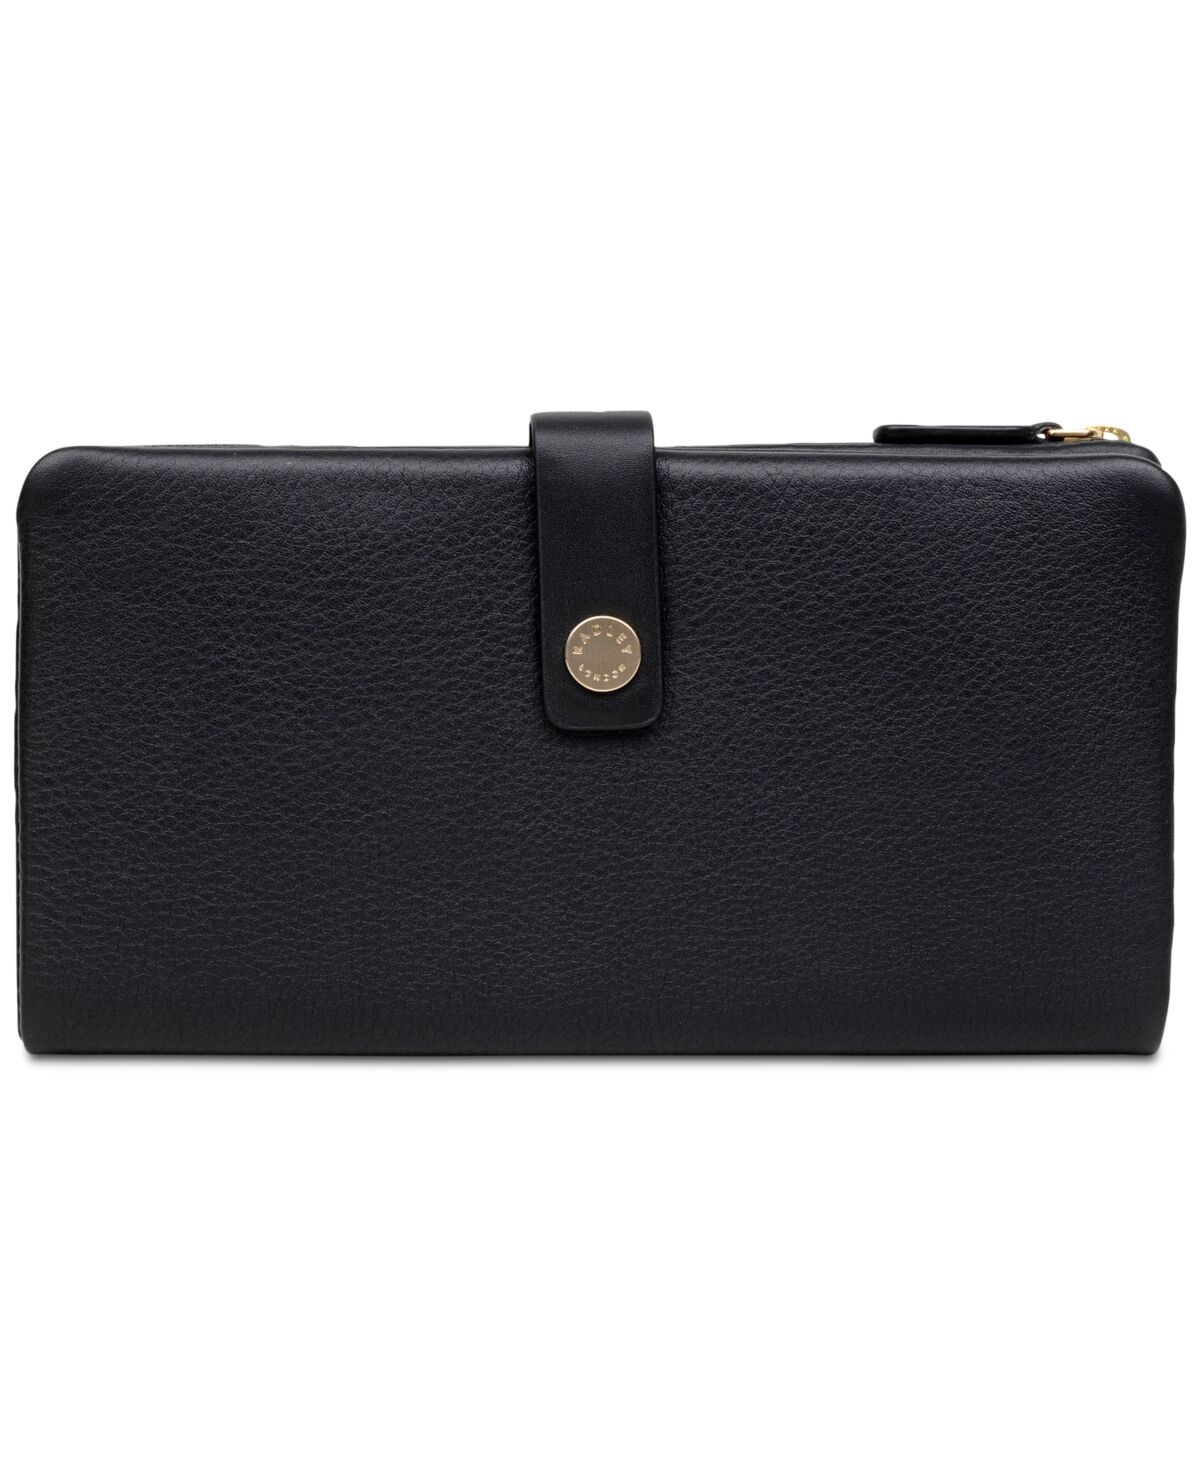 Radley London Women's Larkswood Large Leather Bifold Wallet - Black/Gold